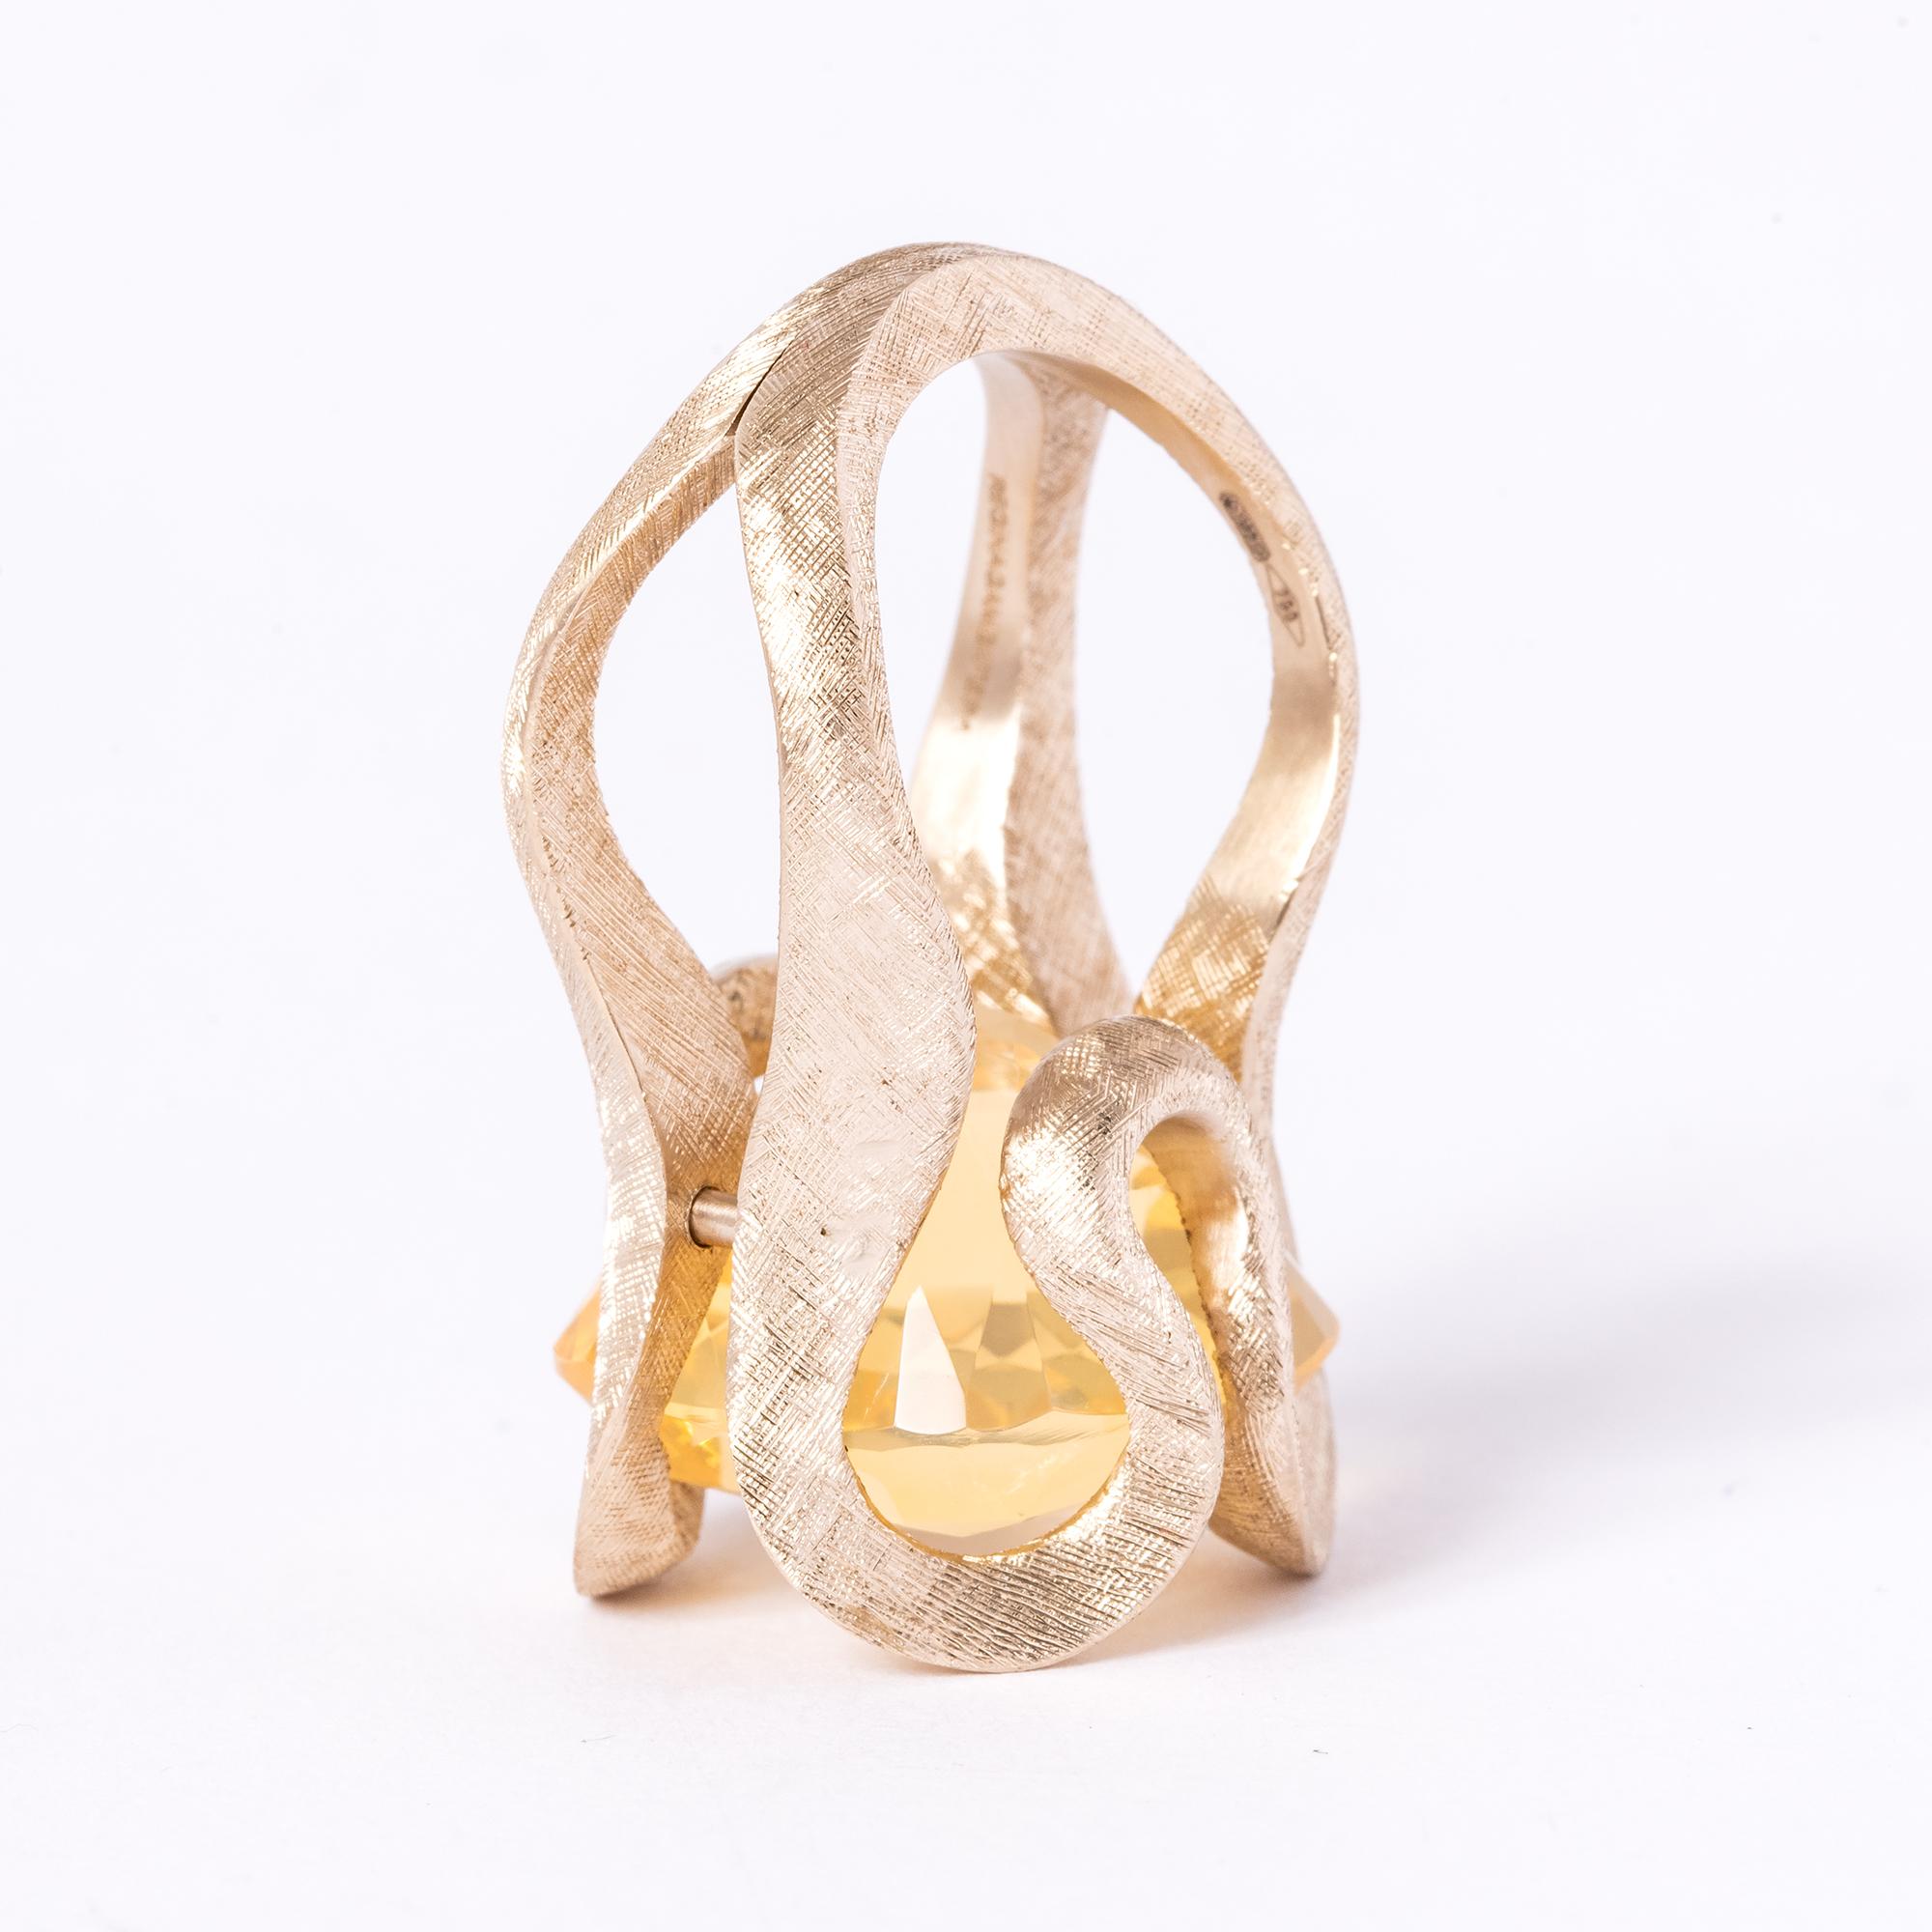 Brilliant Cut Regina Gambatesa Fairy Ring in Glitter Gold and Mexican Opal For Sale